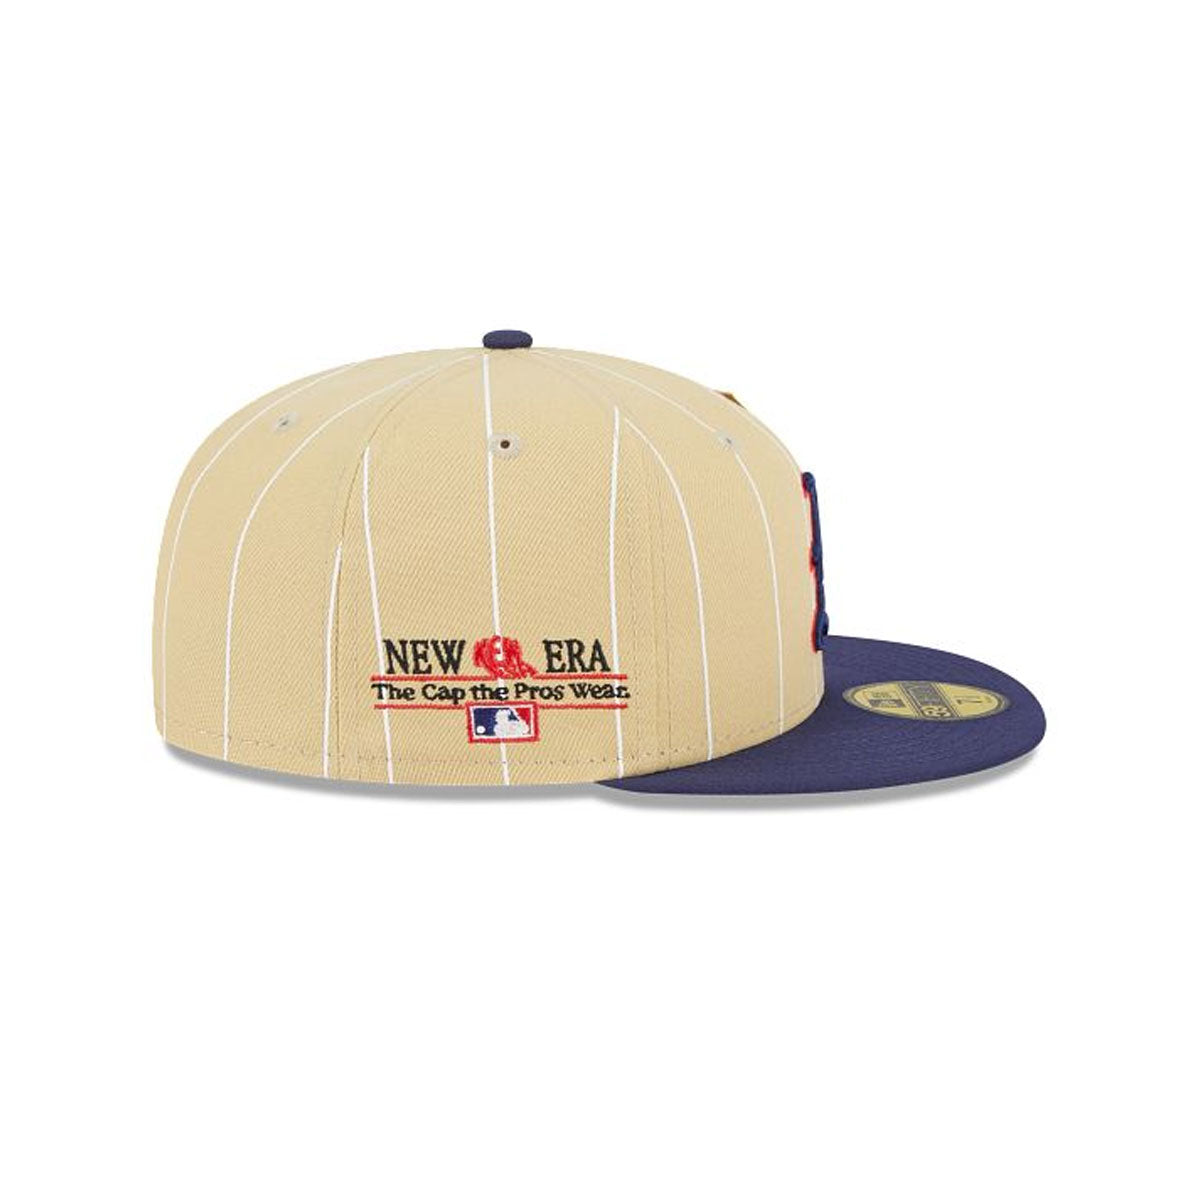 New Era Philadelphia Athetics The Cap That Pros Wear 59Fifty Fitted